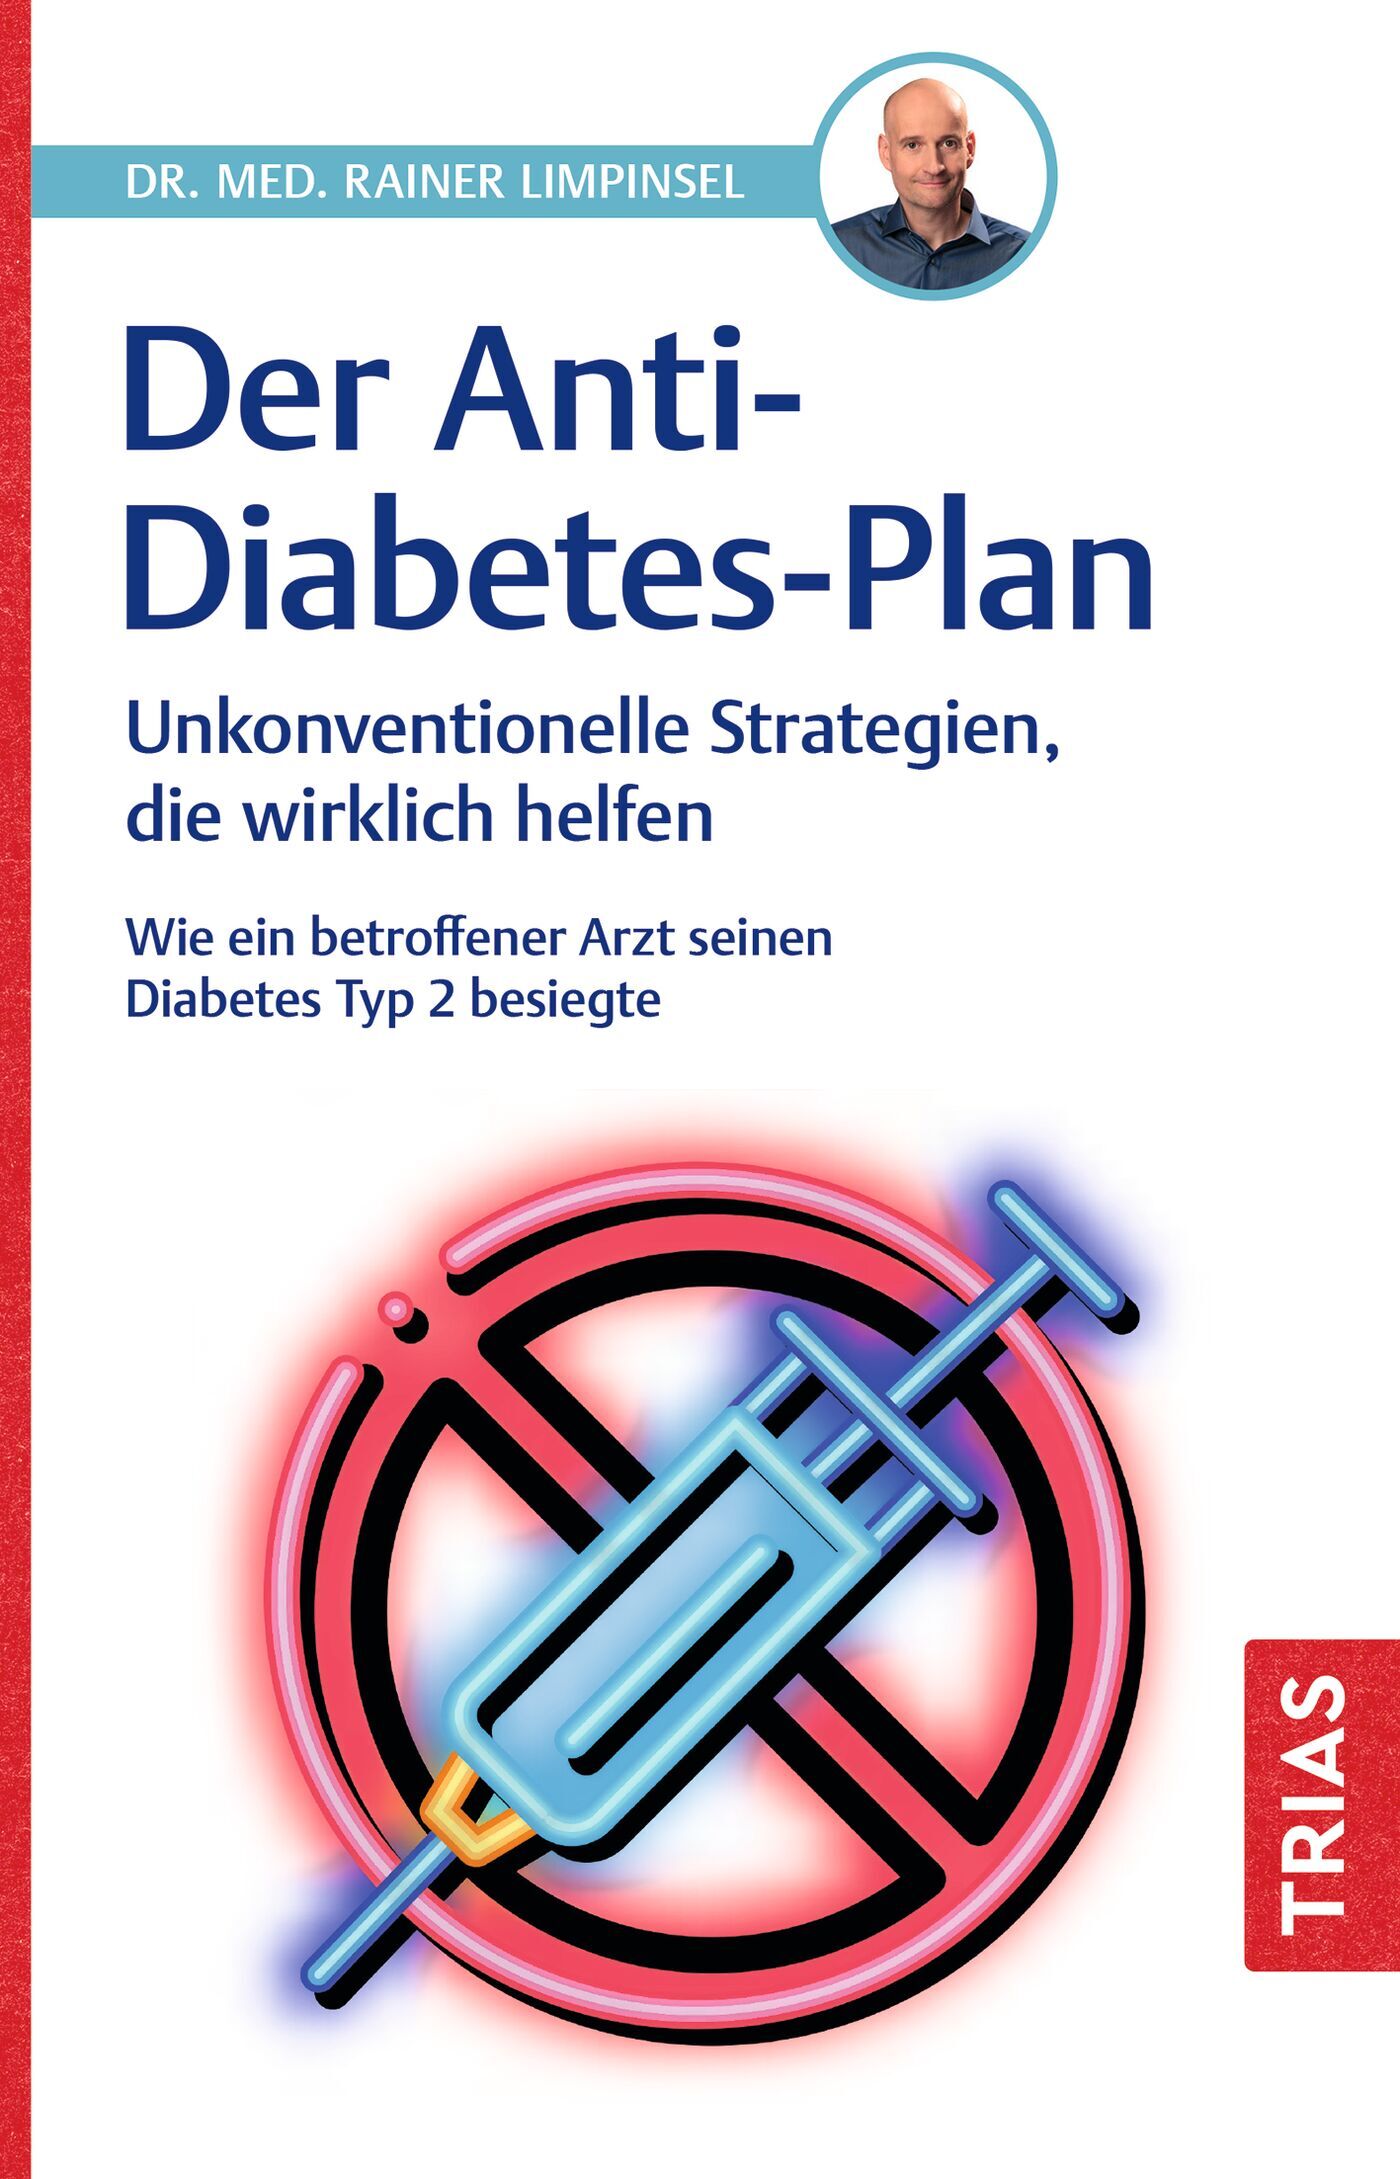 Der Anti-Diabetes-Plan, 9783432118734